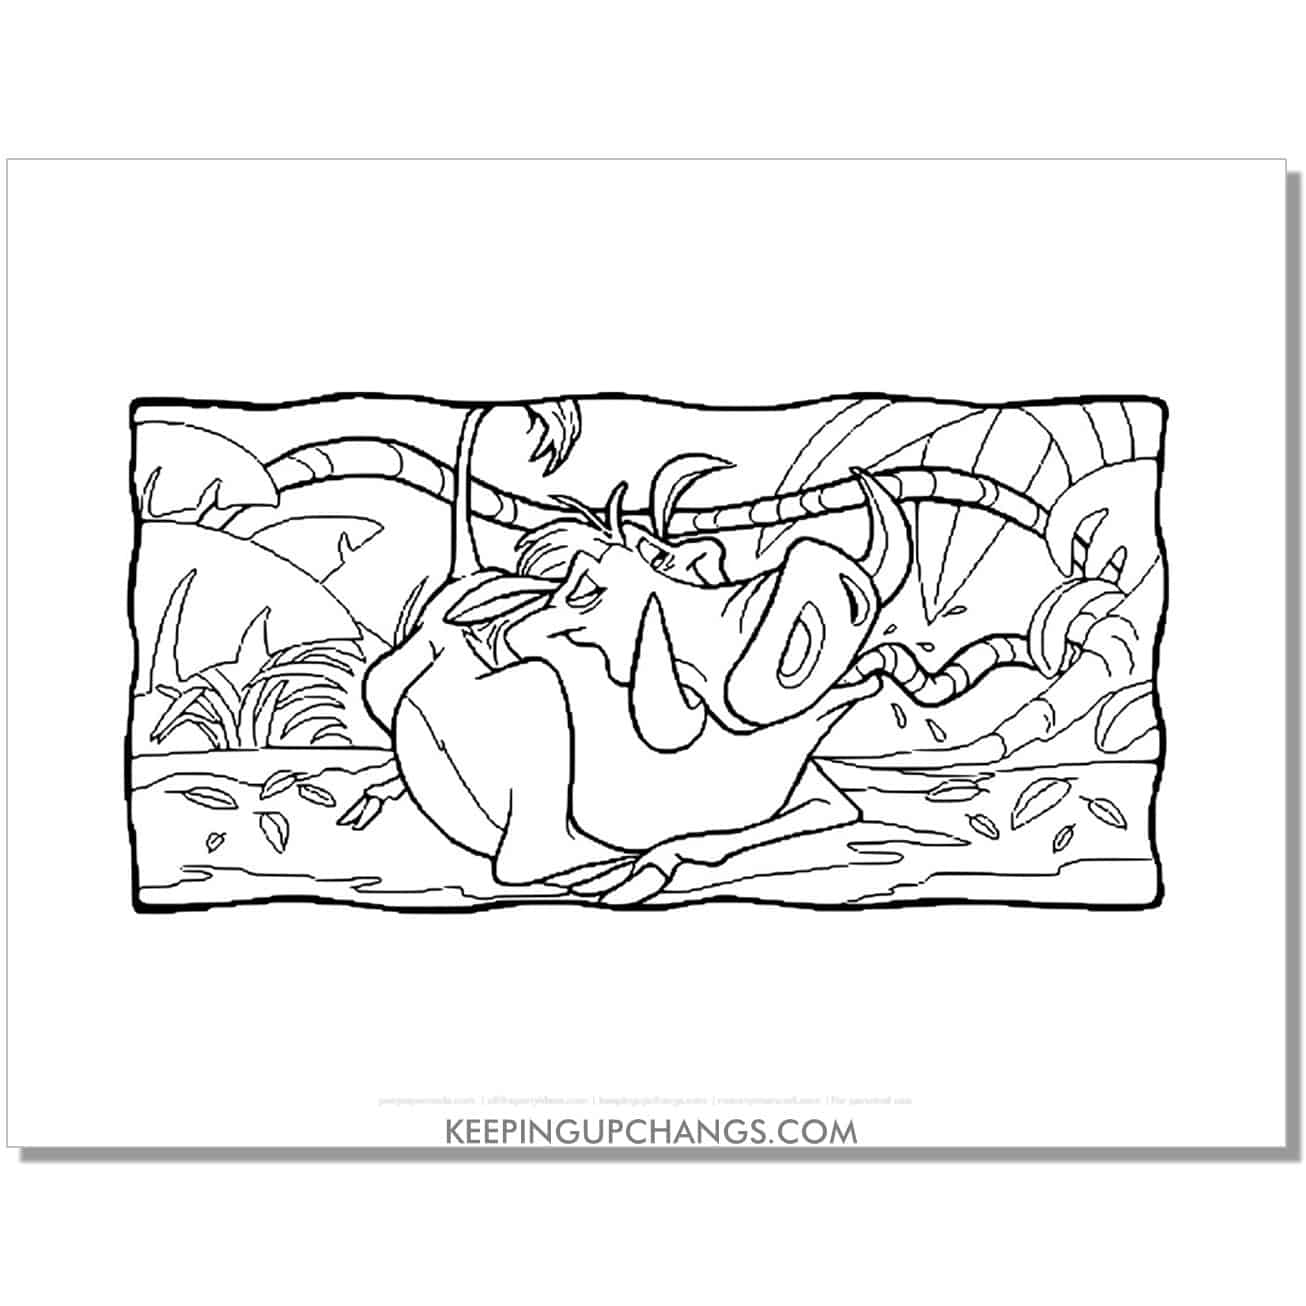 pumbaa slurps up worm lion king coloring page, sheet.